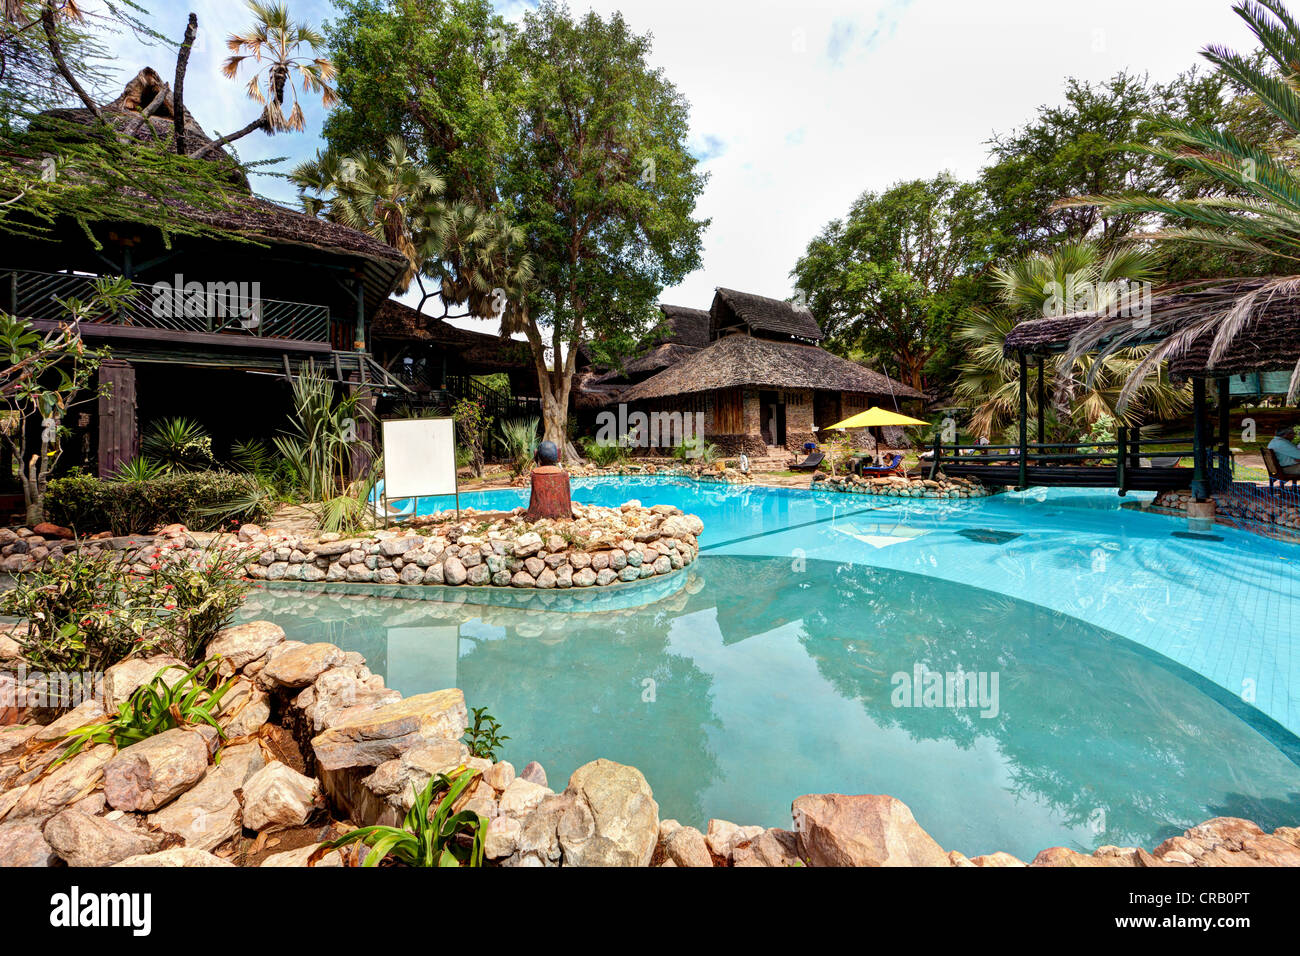 Sarova Shaba Lodge, Shaba National Reserve, Kenya, Afrique de l'Est, l'Afrique Banque D'Images